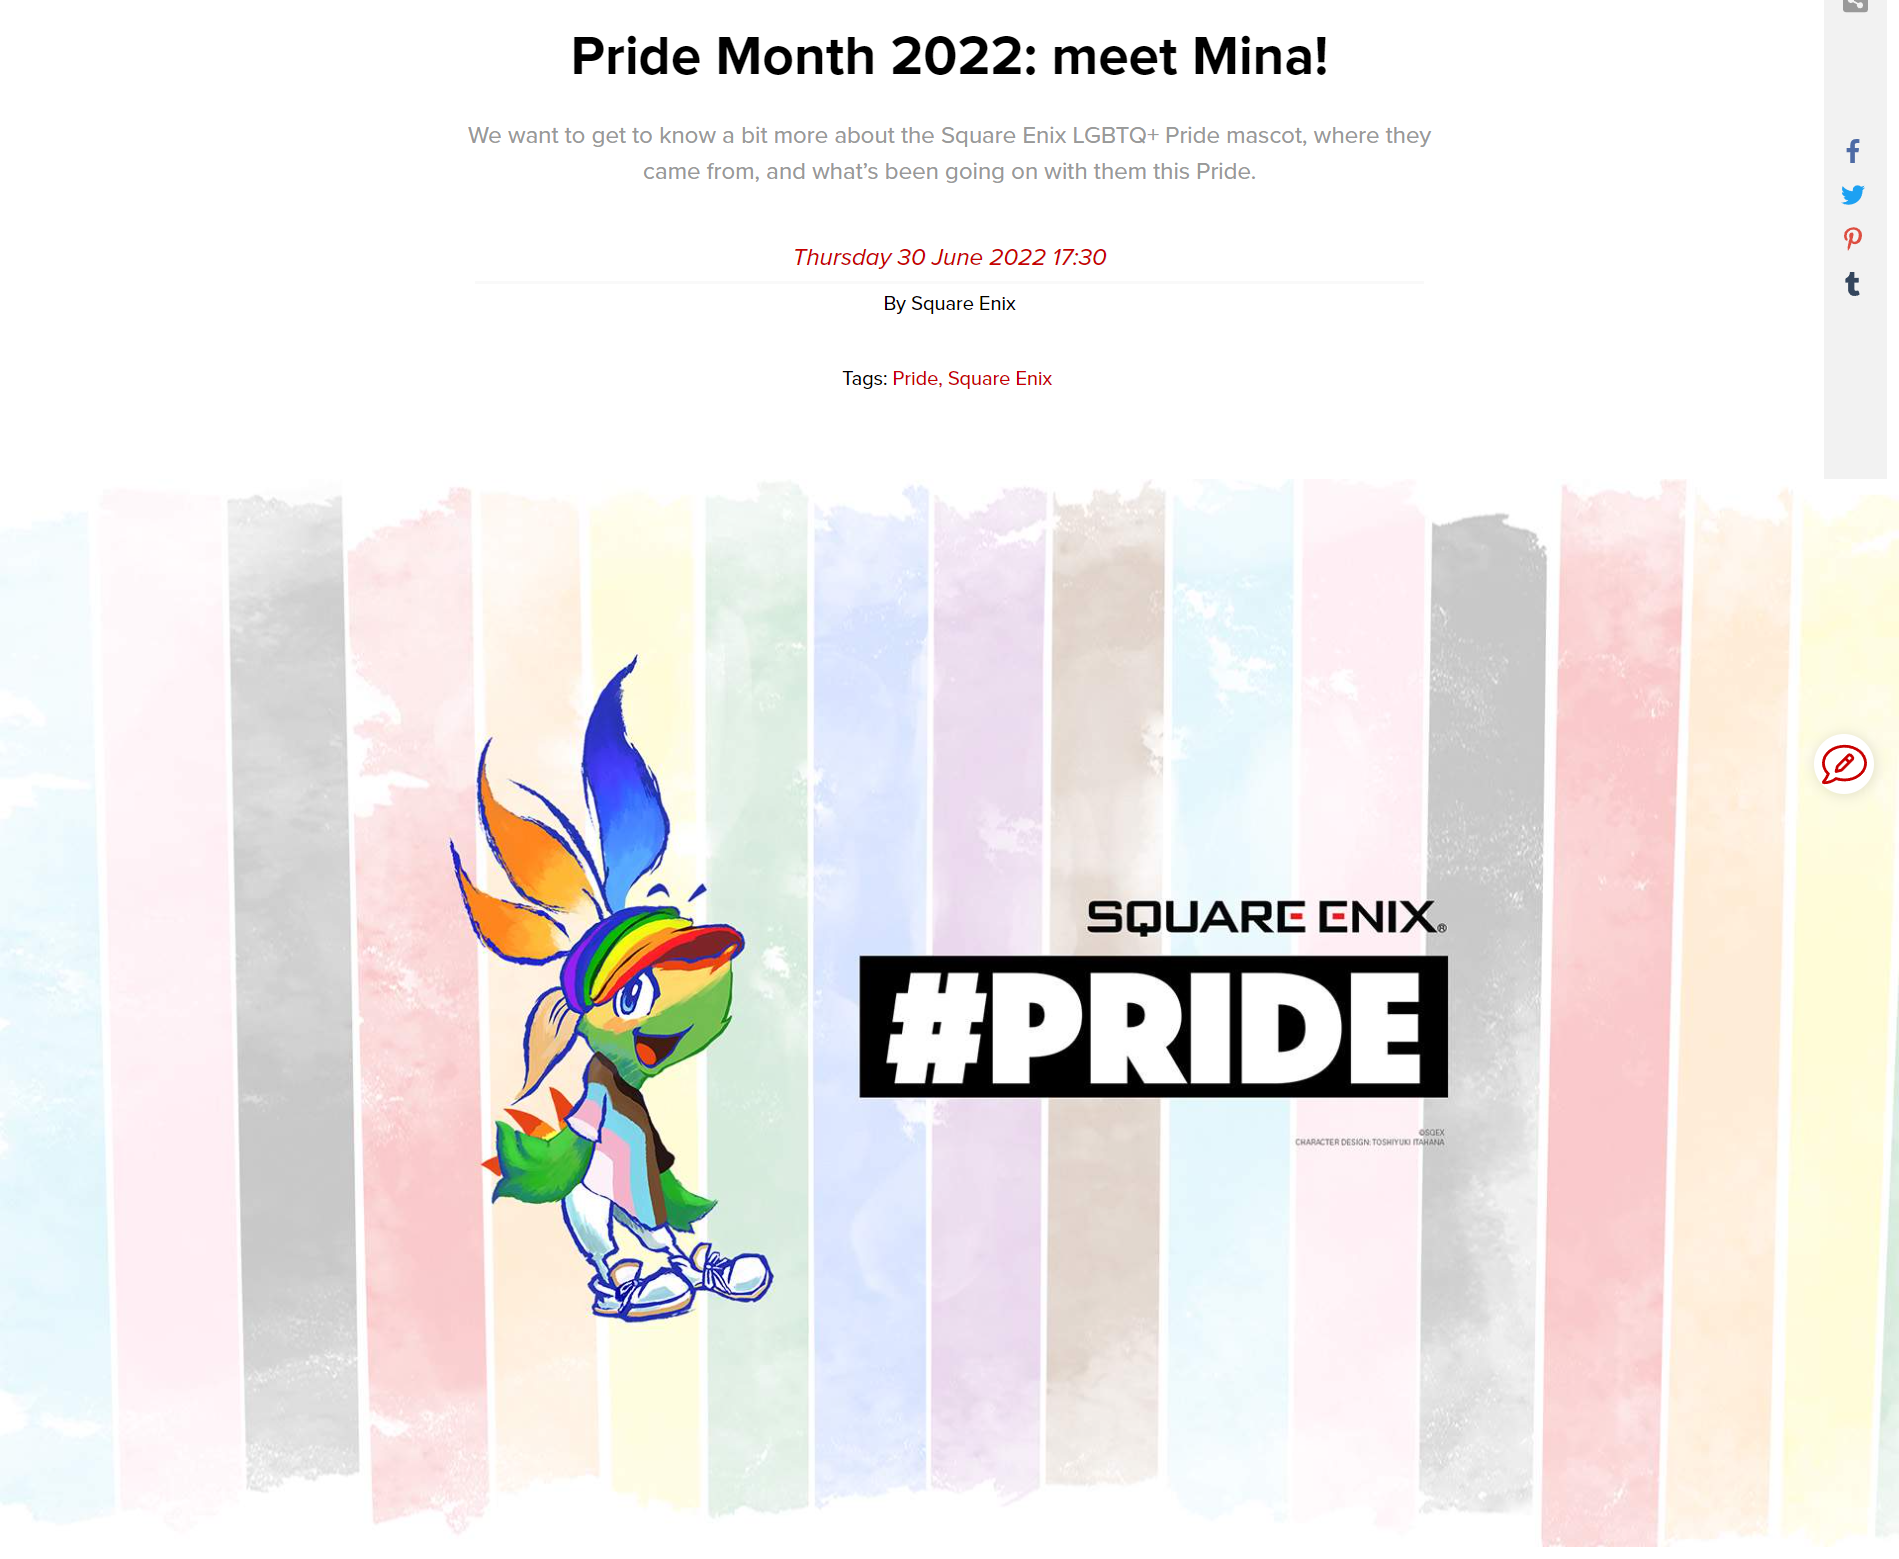 Square Enix' "interview" their LGBTQ+ Pride mascot Mina via Square Enix